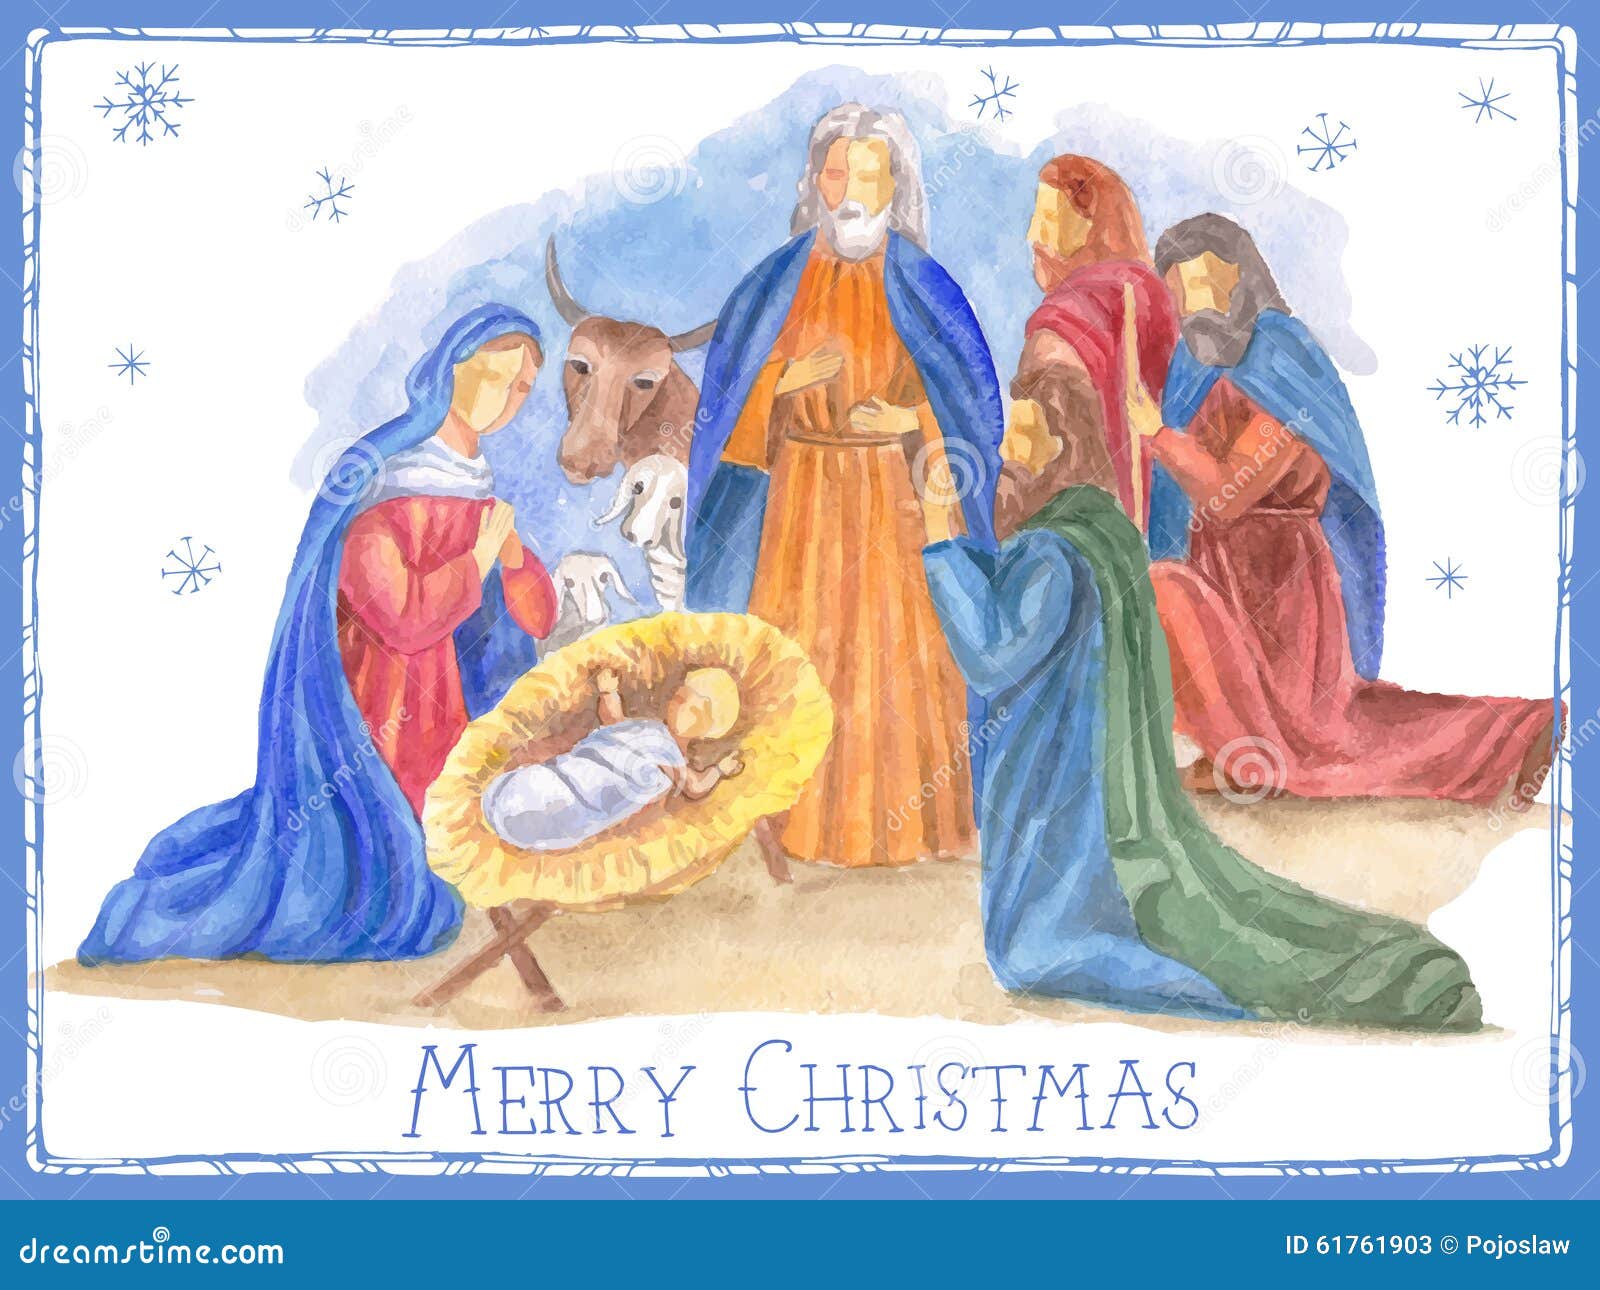 Merry Christmas Nativity Christian Manger Catholic Religion December  Biblical Birth Of The Child Jesus Scene Cartoon Vector Illustration Graphic  Design Royalty Free SVG, Cliparts, Vectors, and Stock Illustration. Image  130769112.